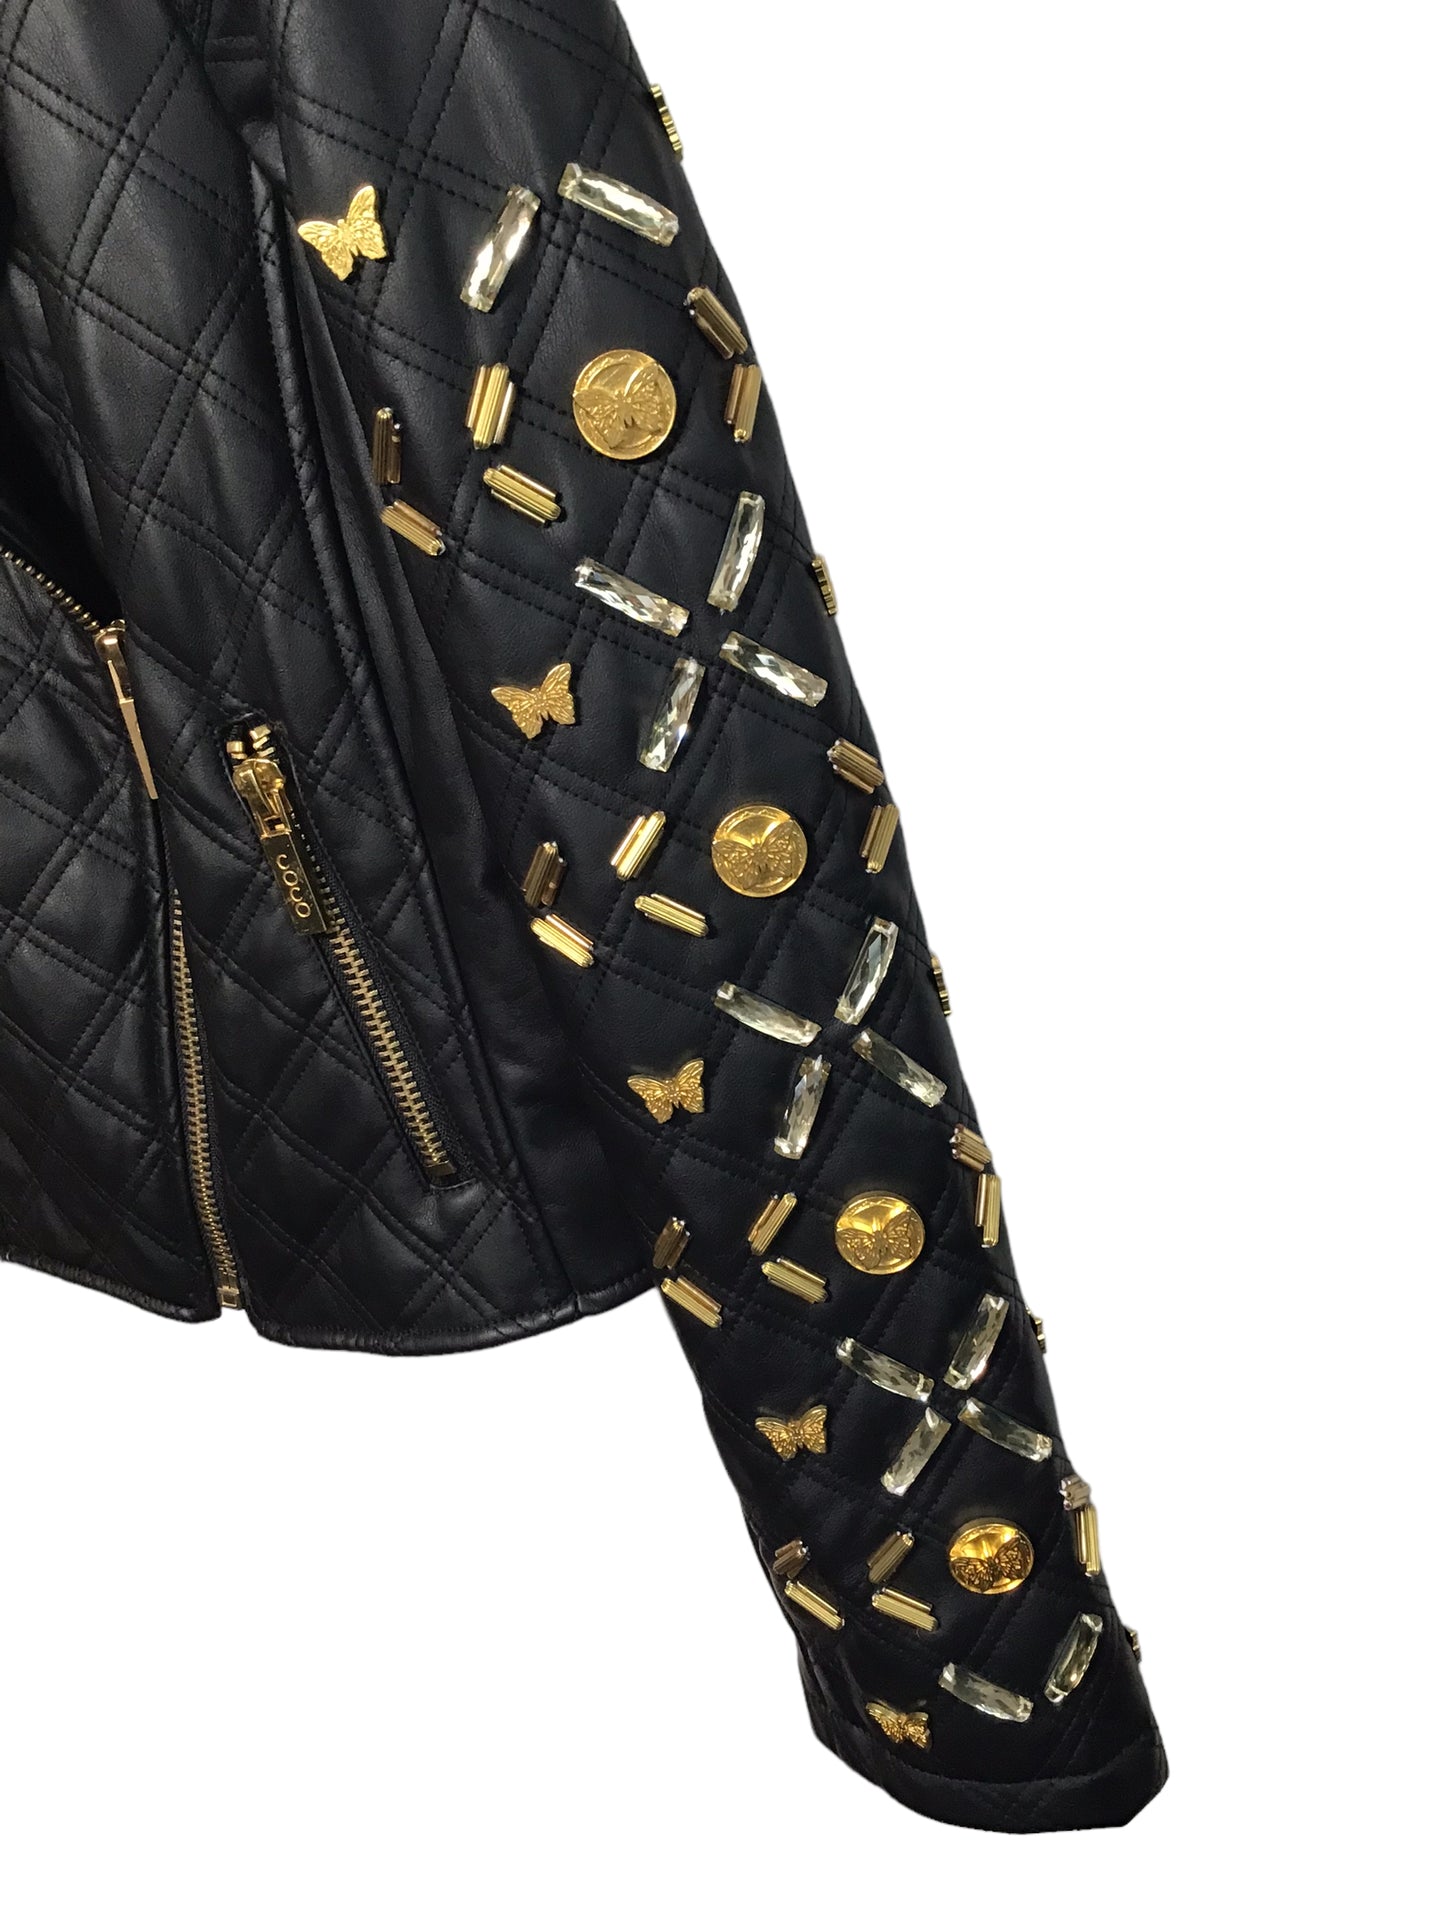 Disney by Coco Rocha Embellished Faux Leather Jacket (Women's Size L)